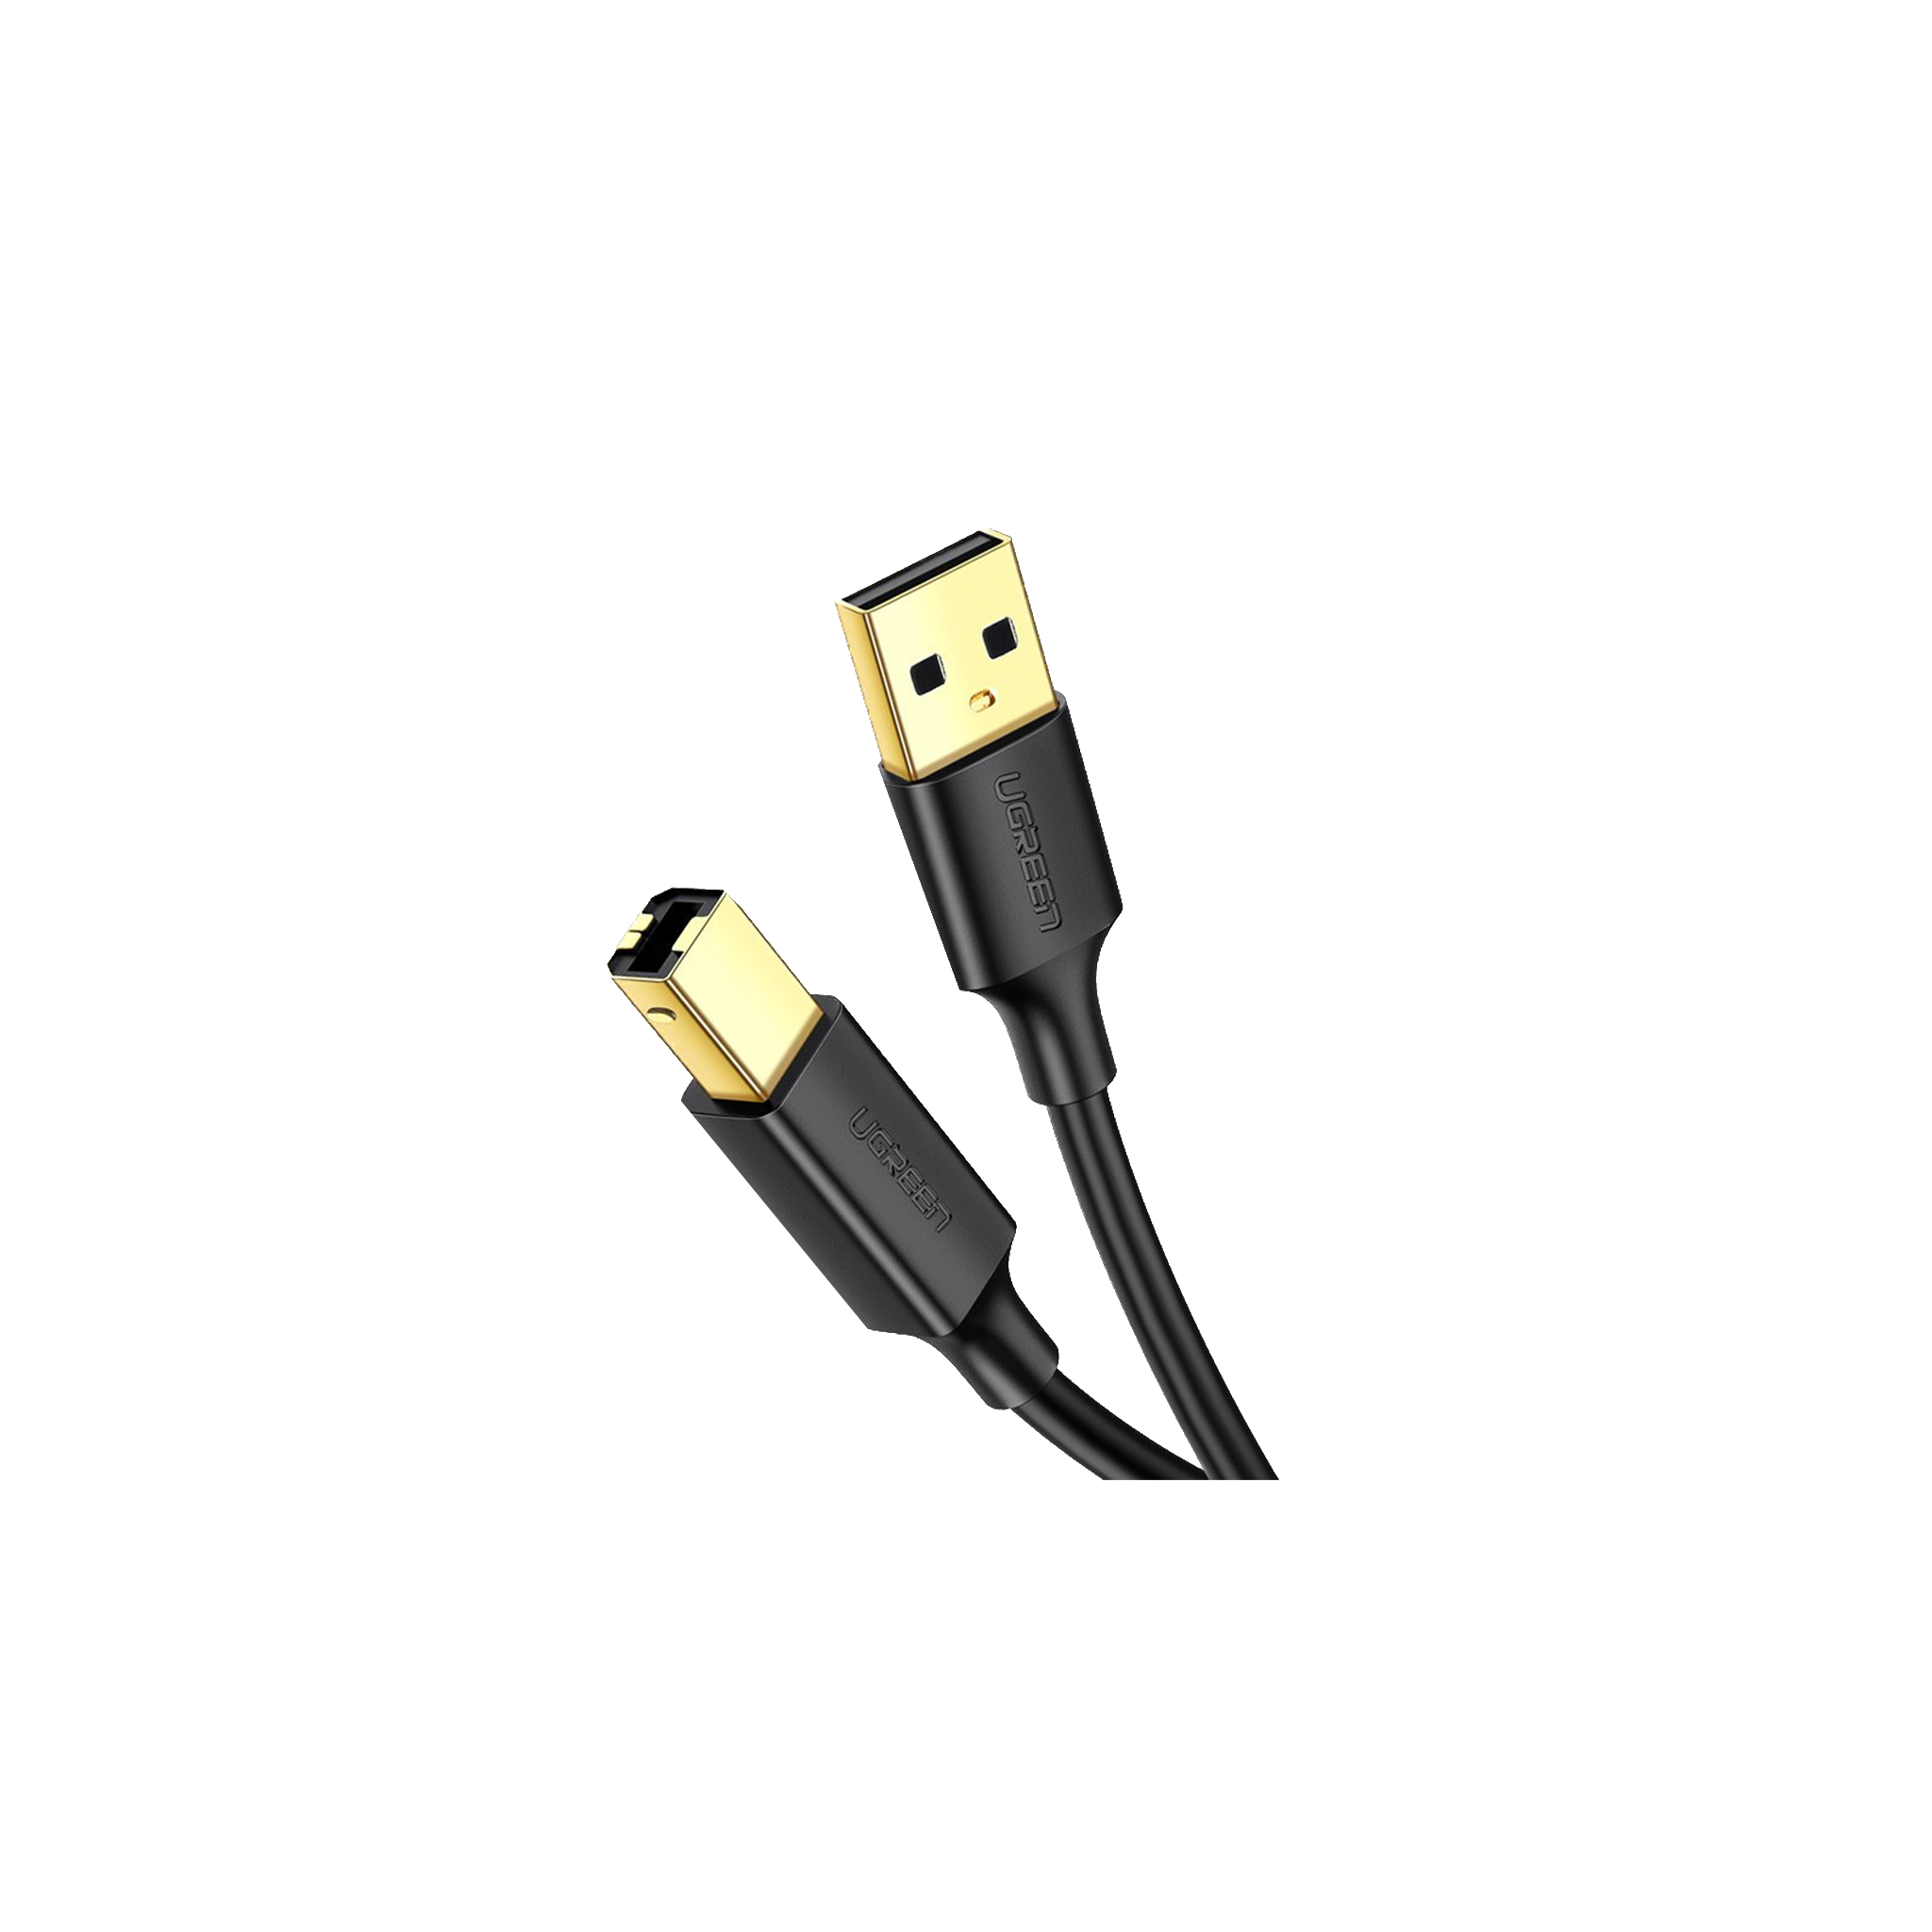 UGREEN USB B to USB A Print Cable 1.5m